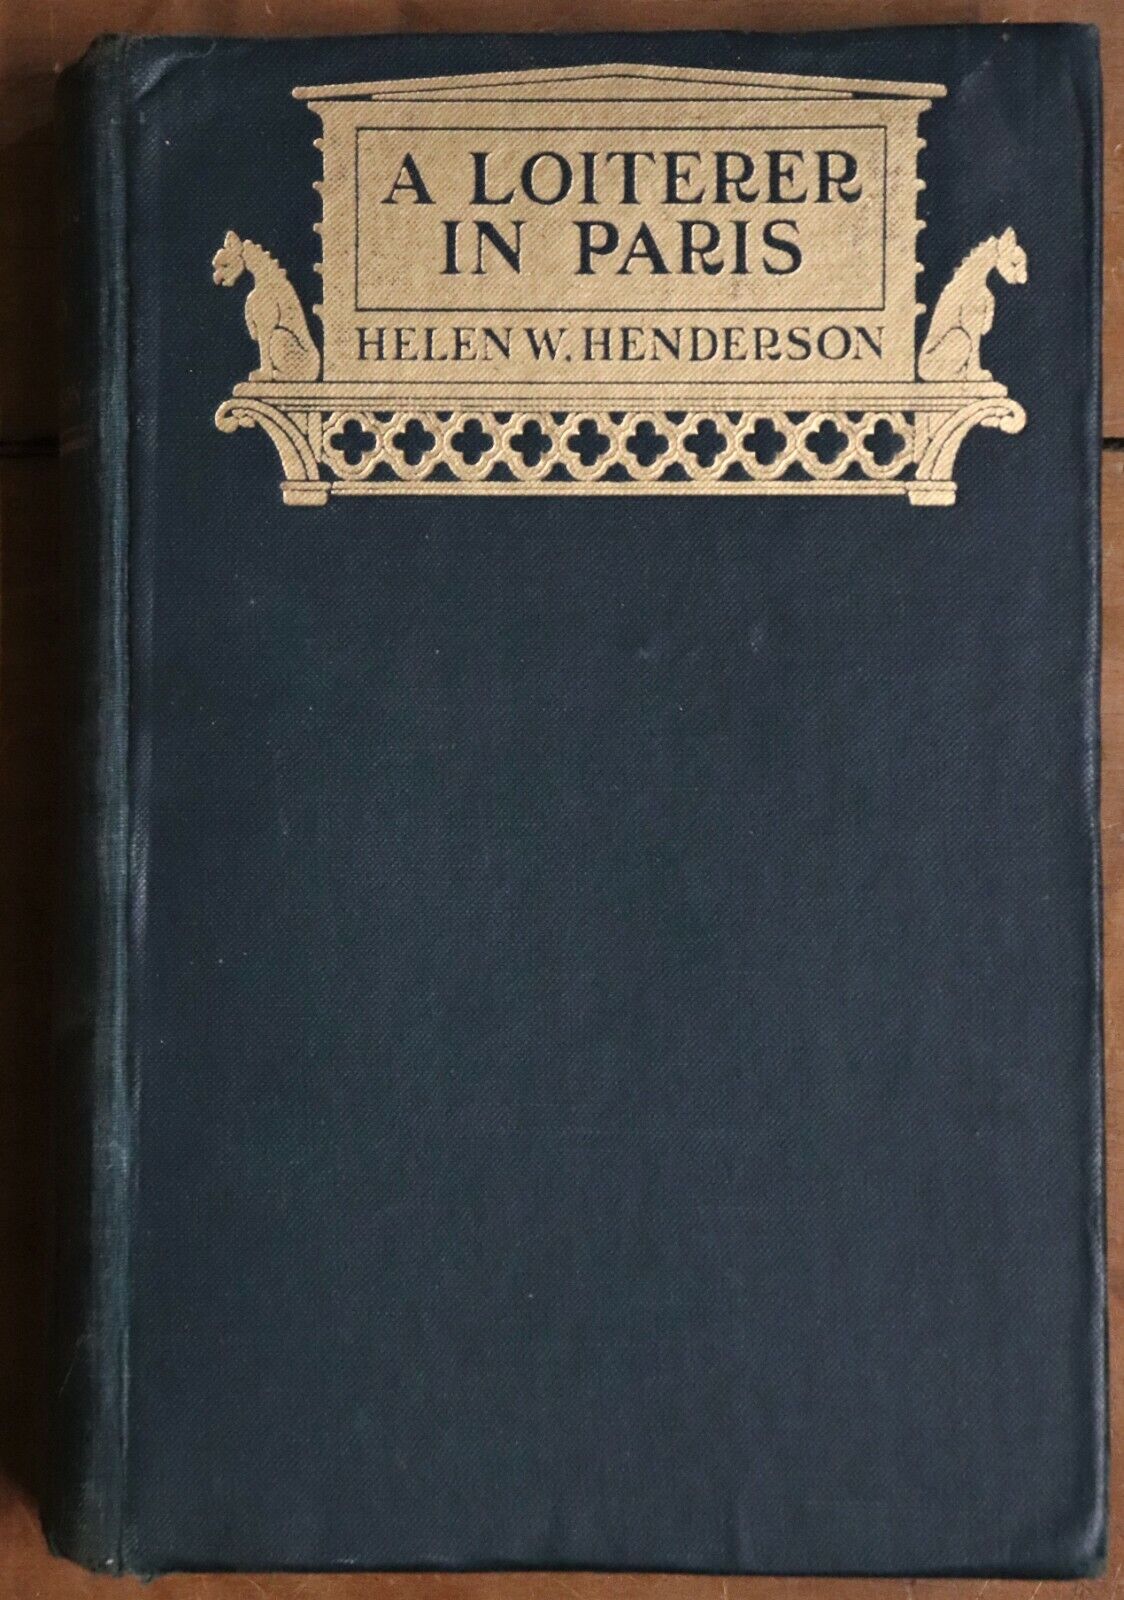 1927 A Loiterer In Paris by Helen W. Henderson Antique Travel Book 1st Edition